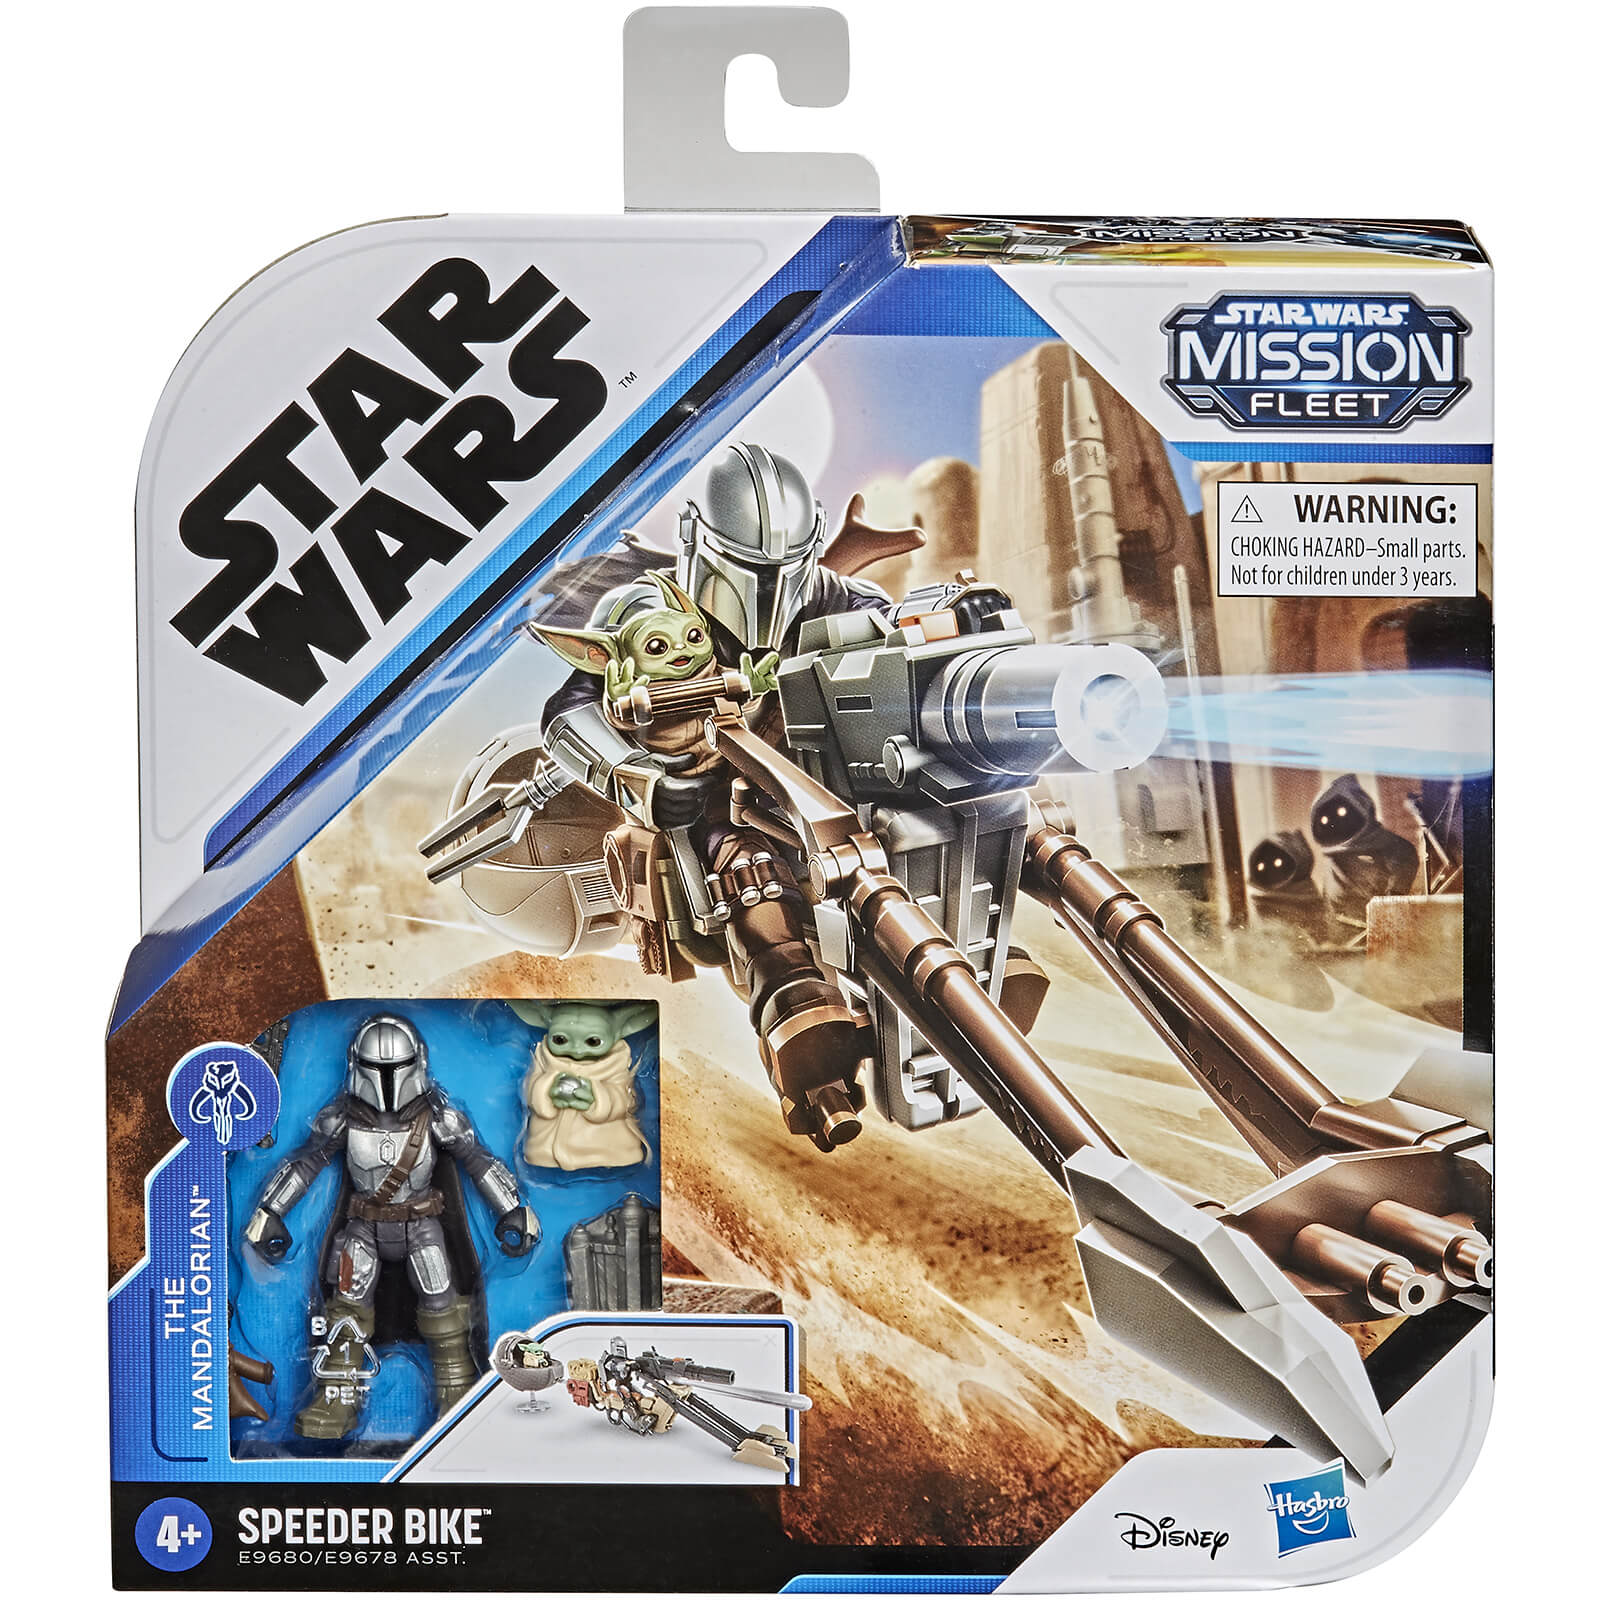 Hasbro Star Wars Mission Fleet The Mandalorian Battle for the Bounty Action Figure